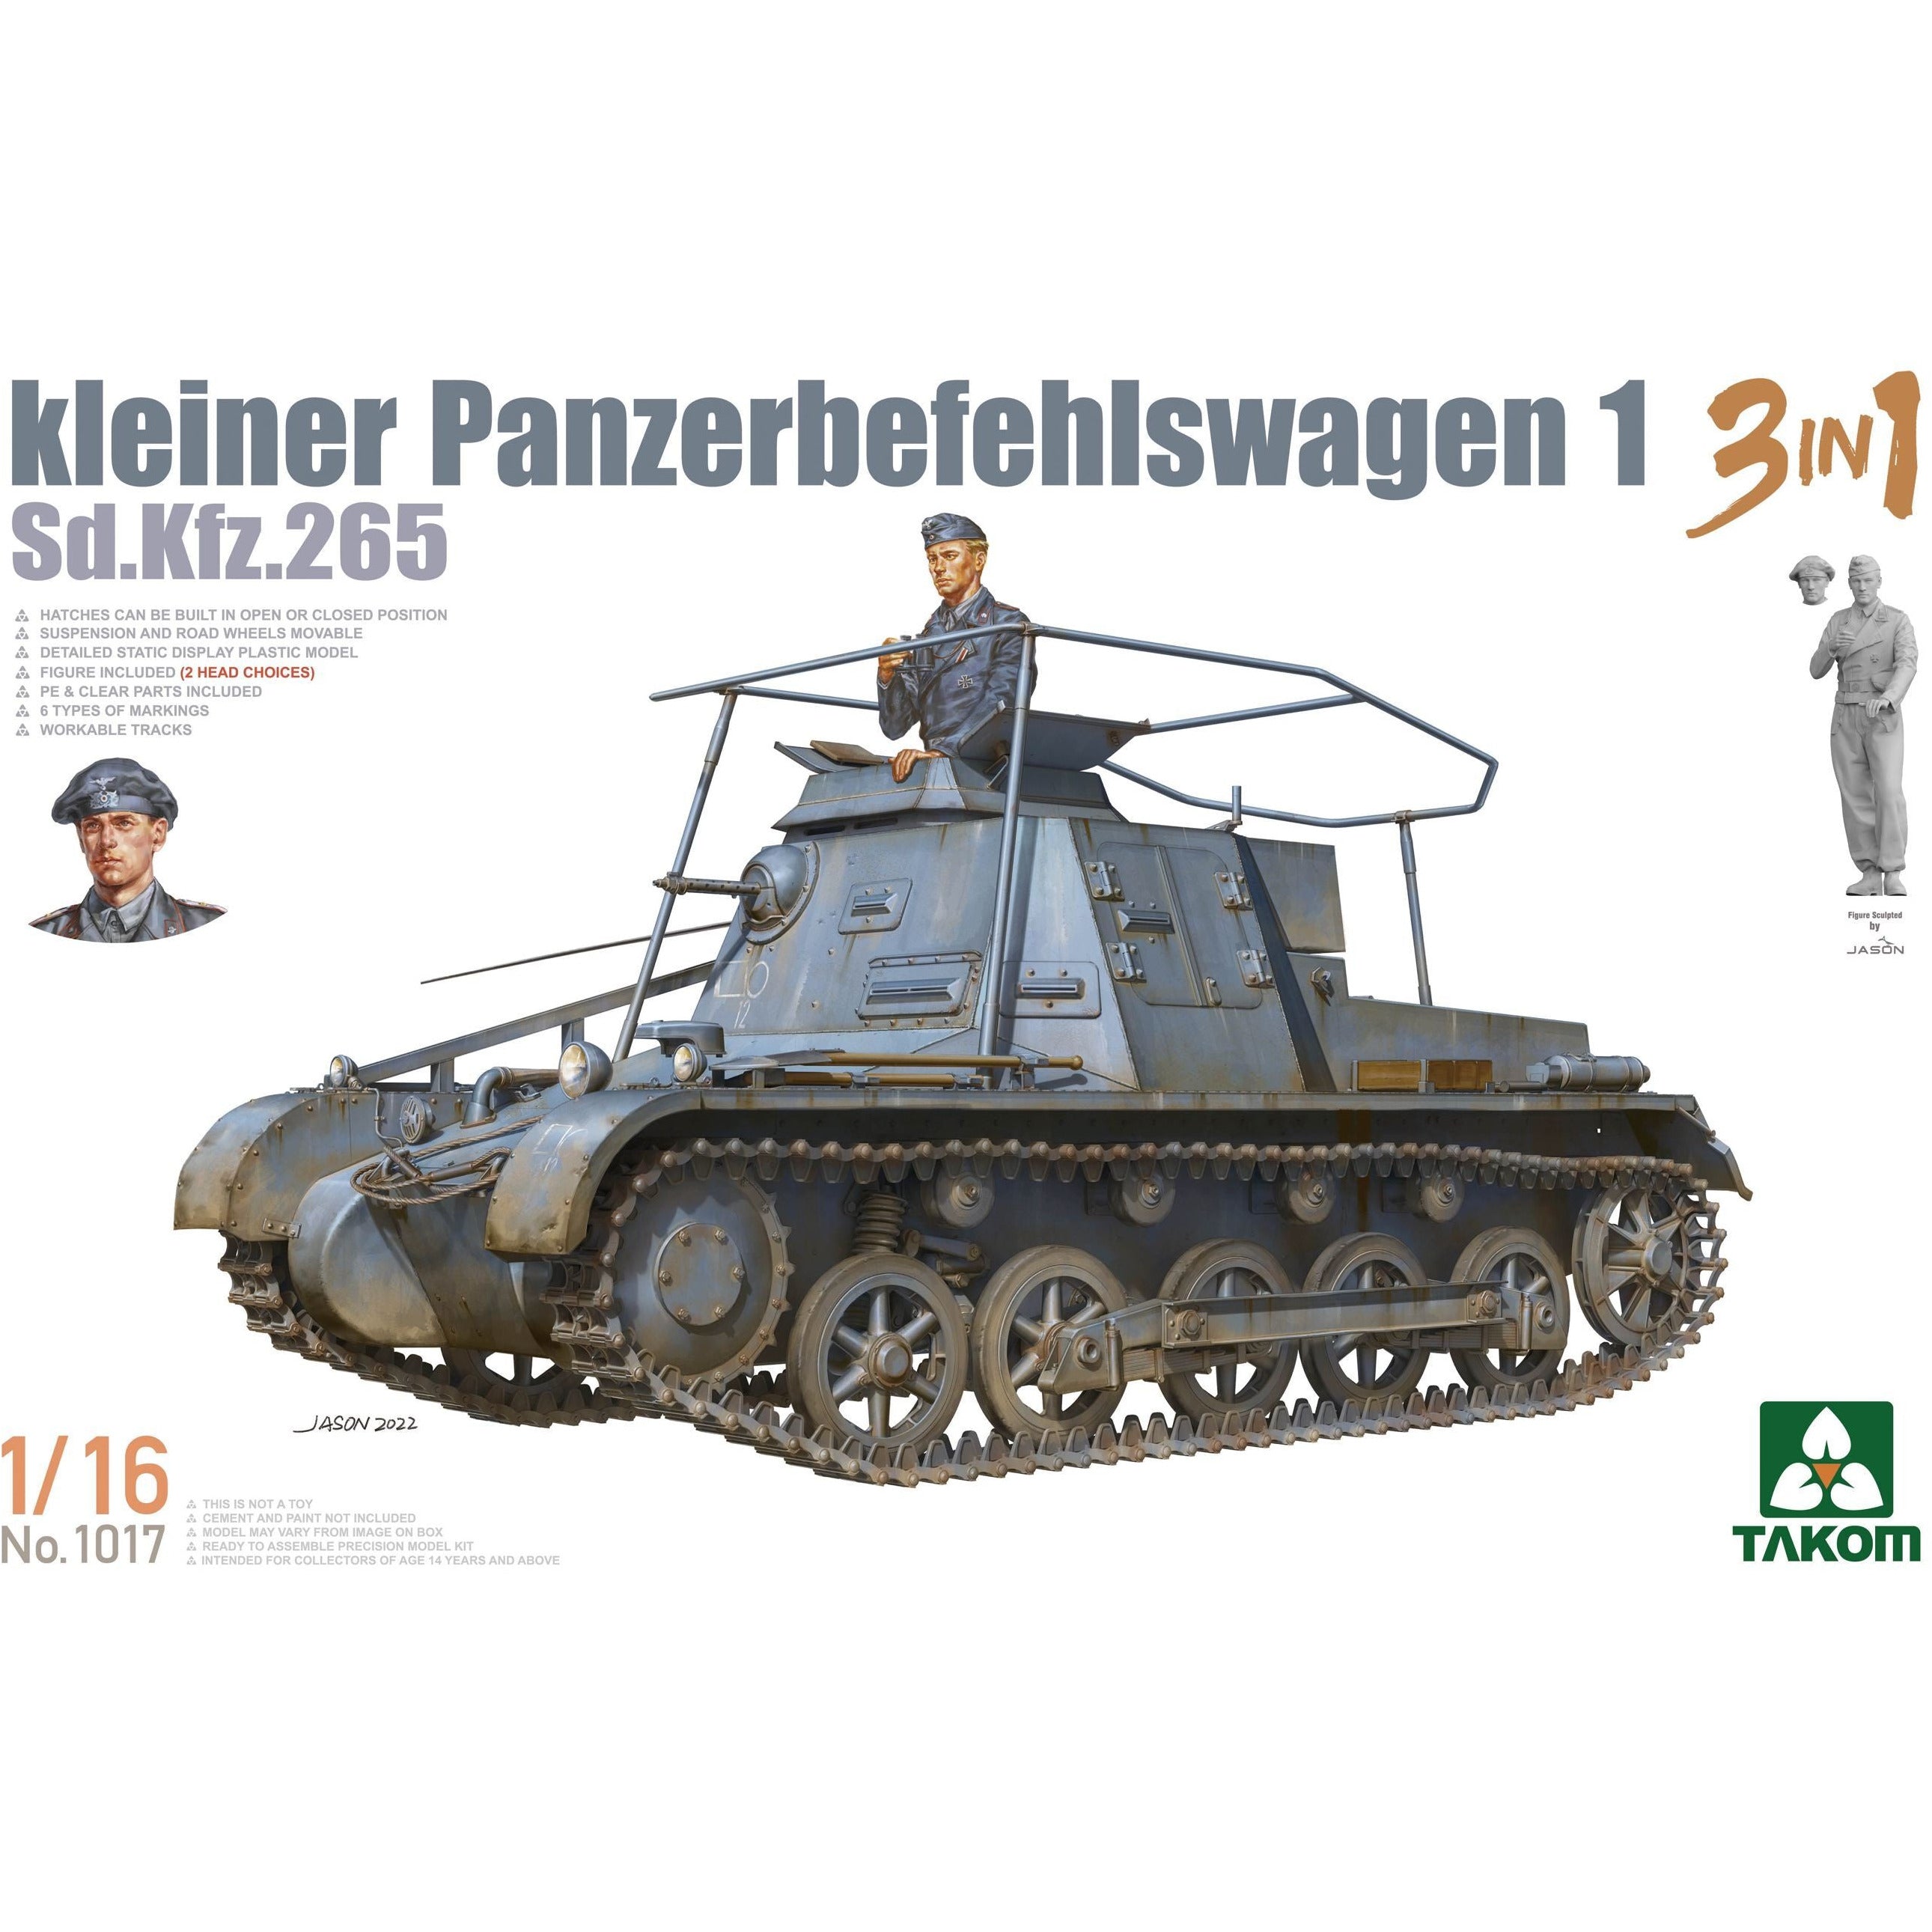 Kleiner Panzerbefehlswagen I Sd.Kfz.265 1/16 3 in 1 Model Military Kit by Takom